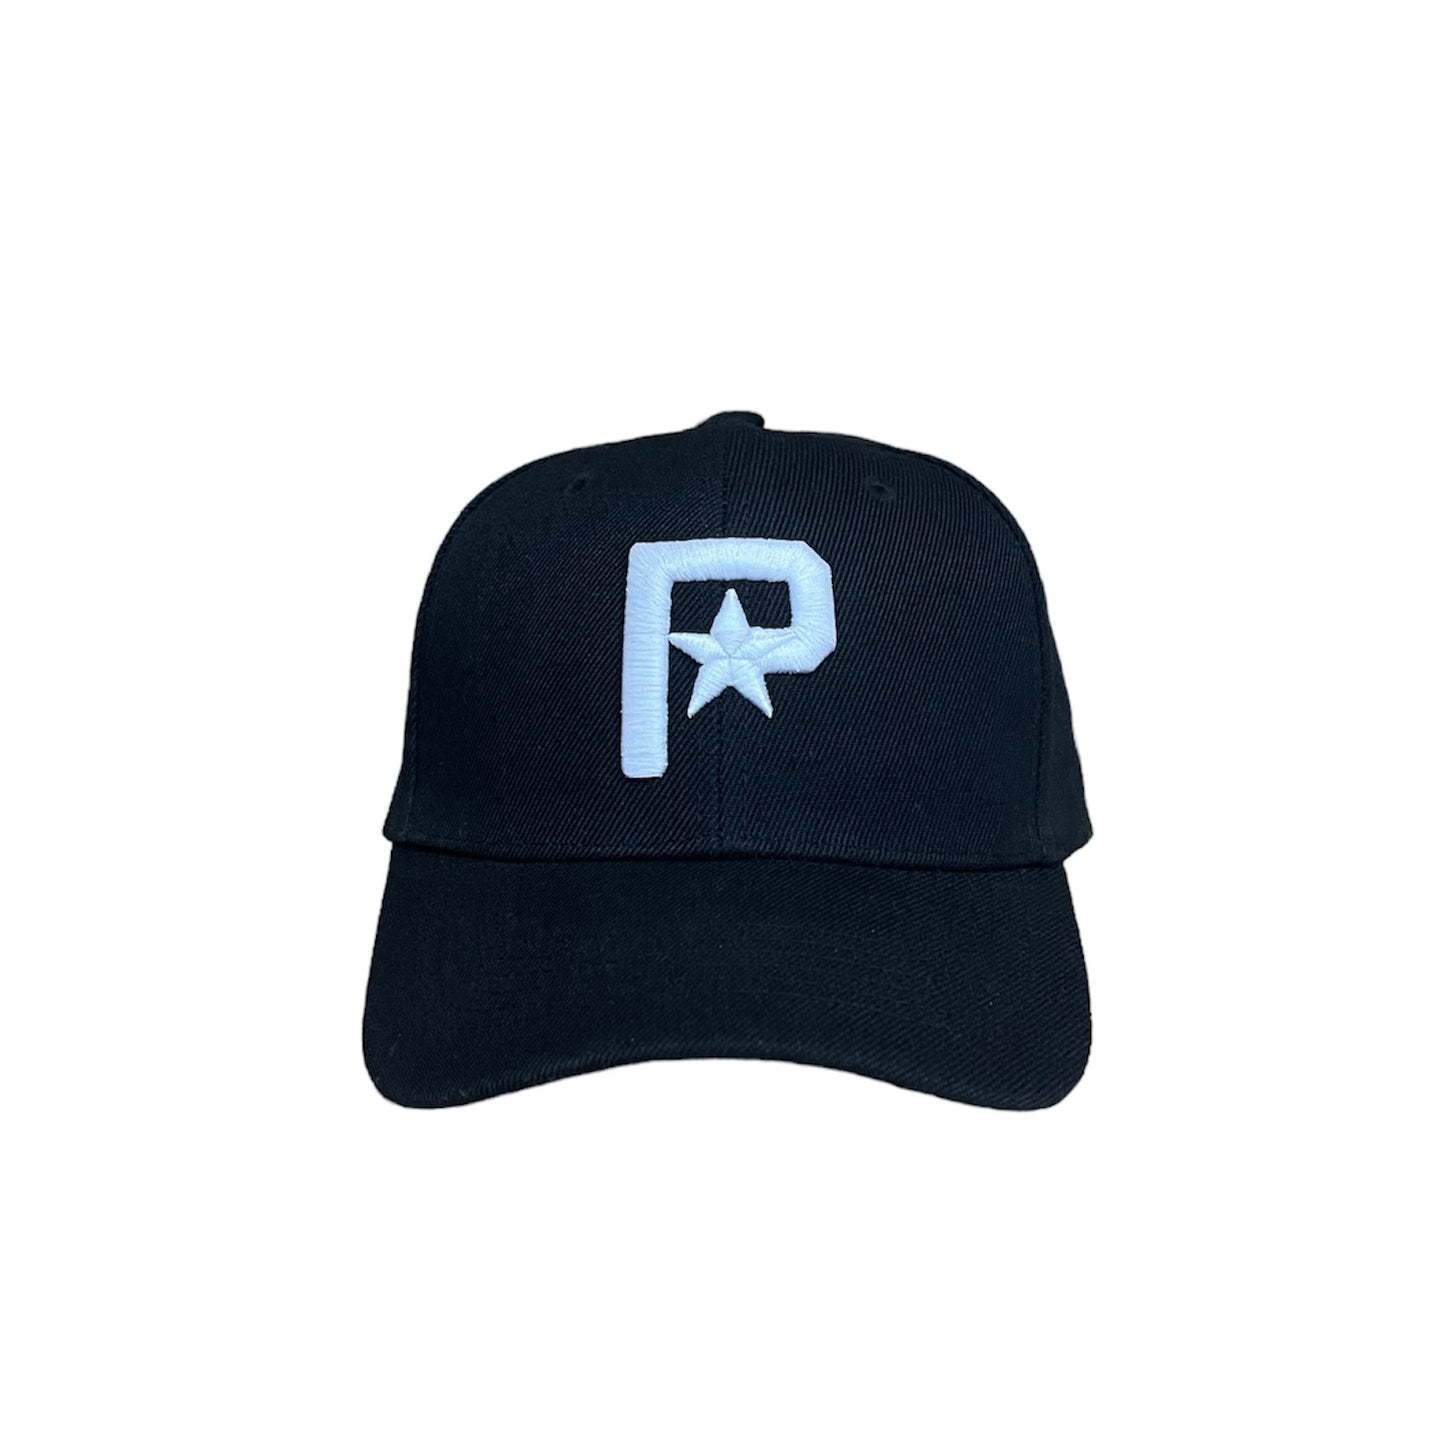 P-Star Black Baseball caps